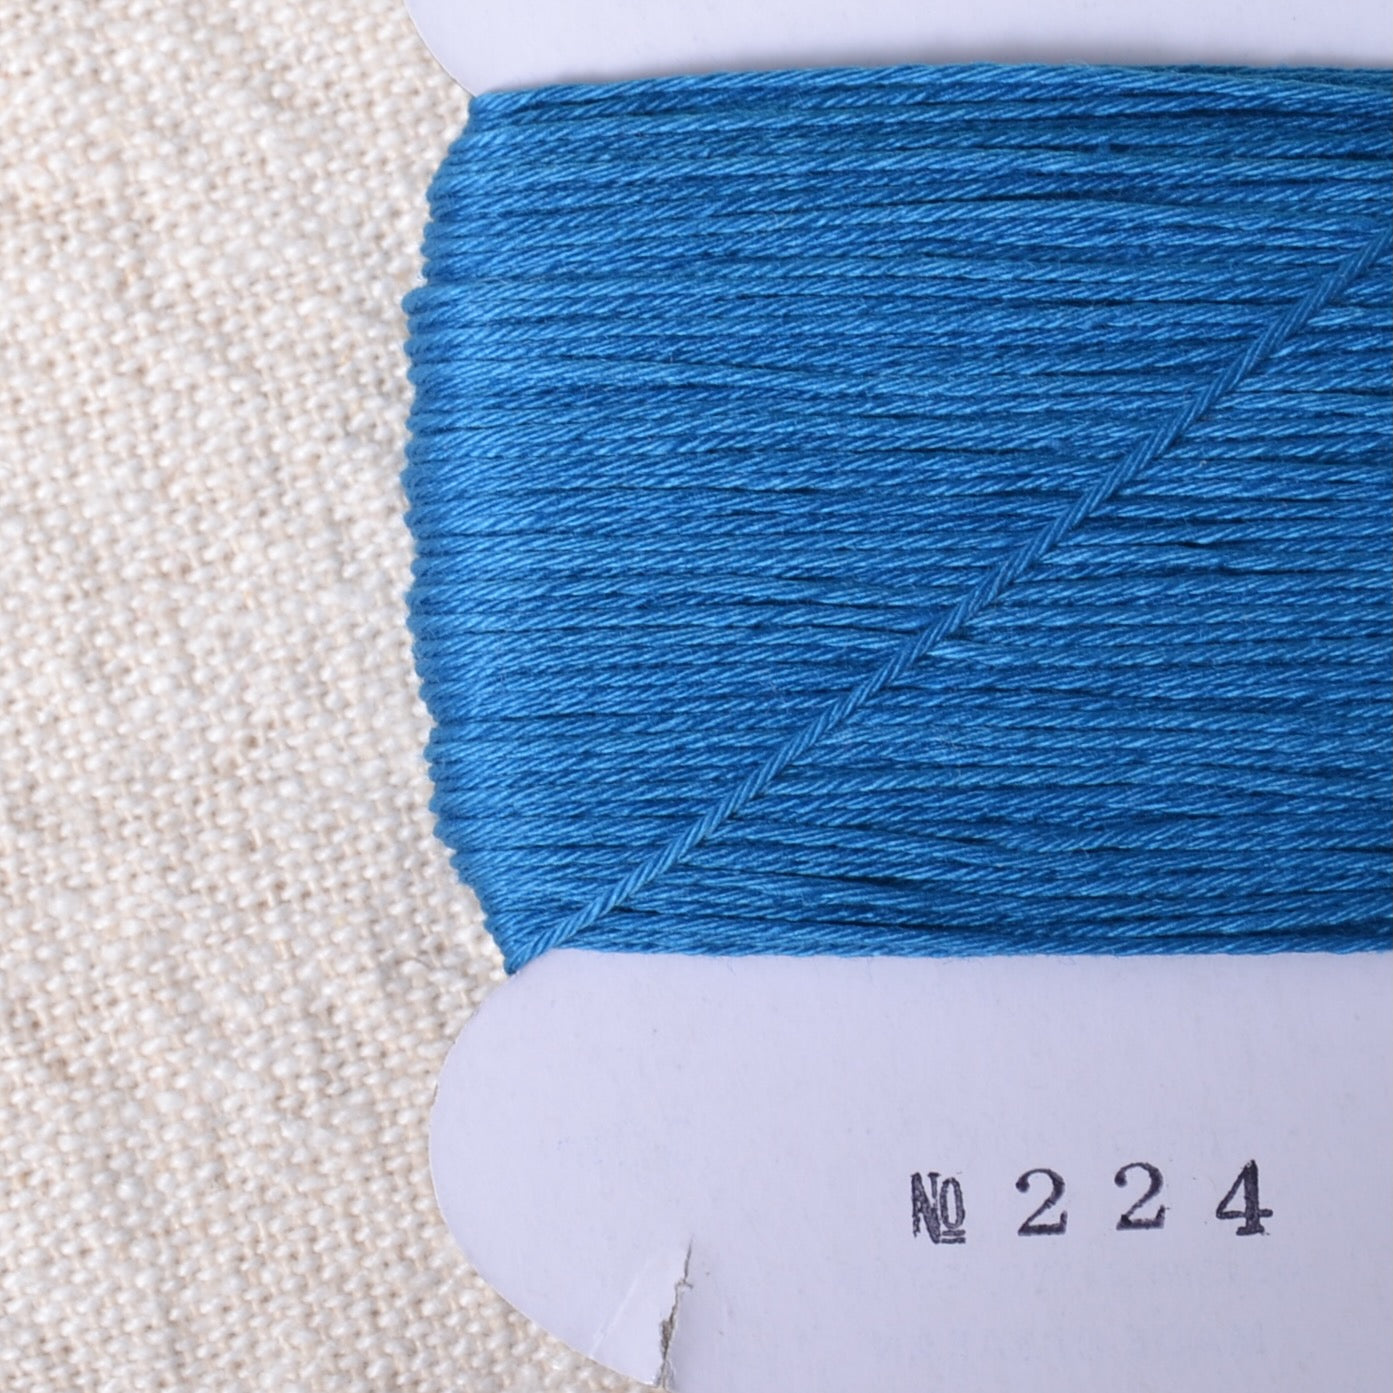 Sashiko Thread Daruma 100% Cotton Thread for Sashiko Stitching